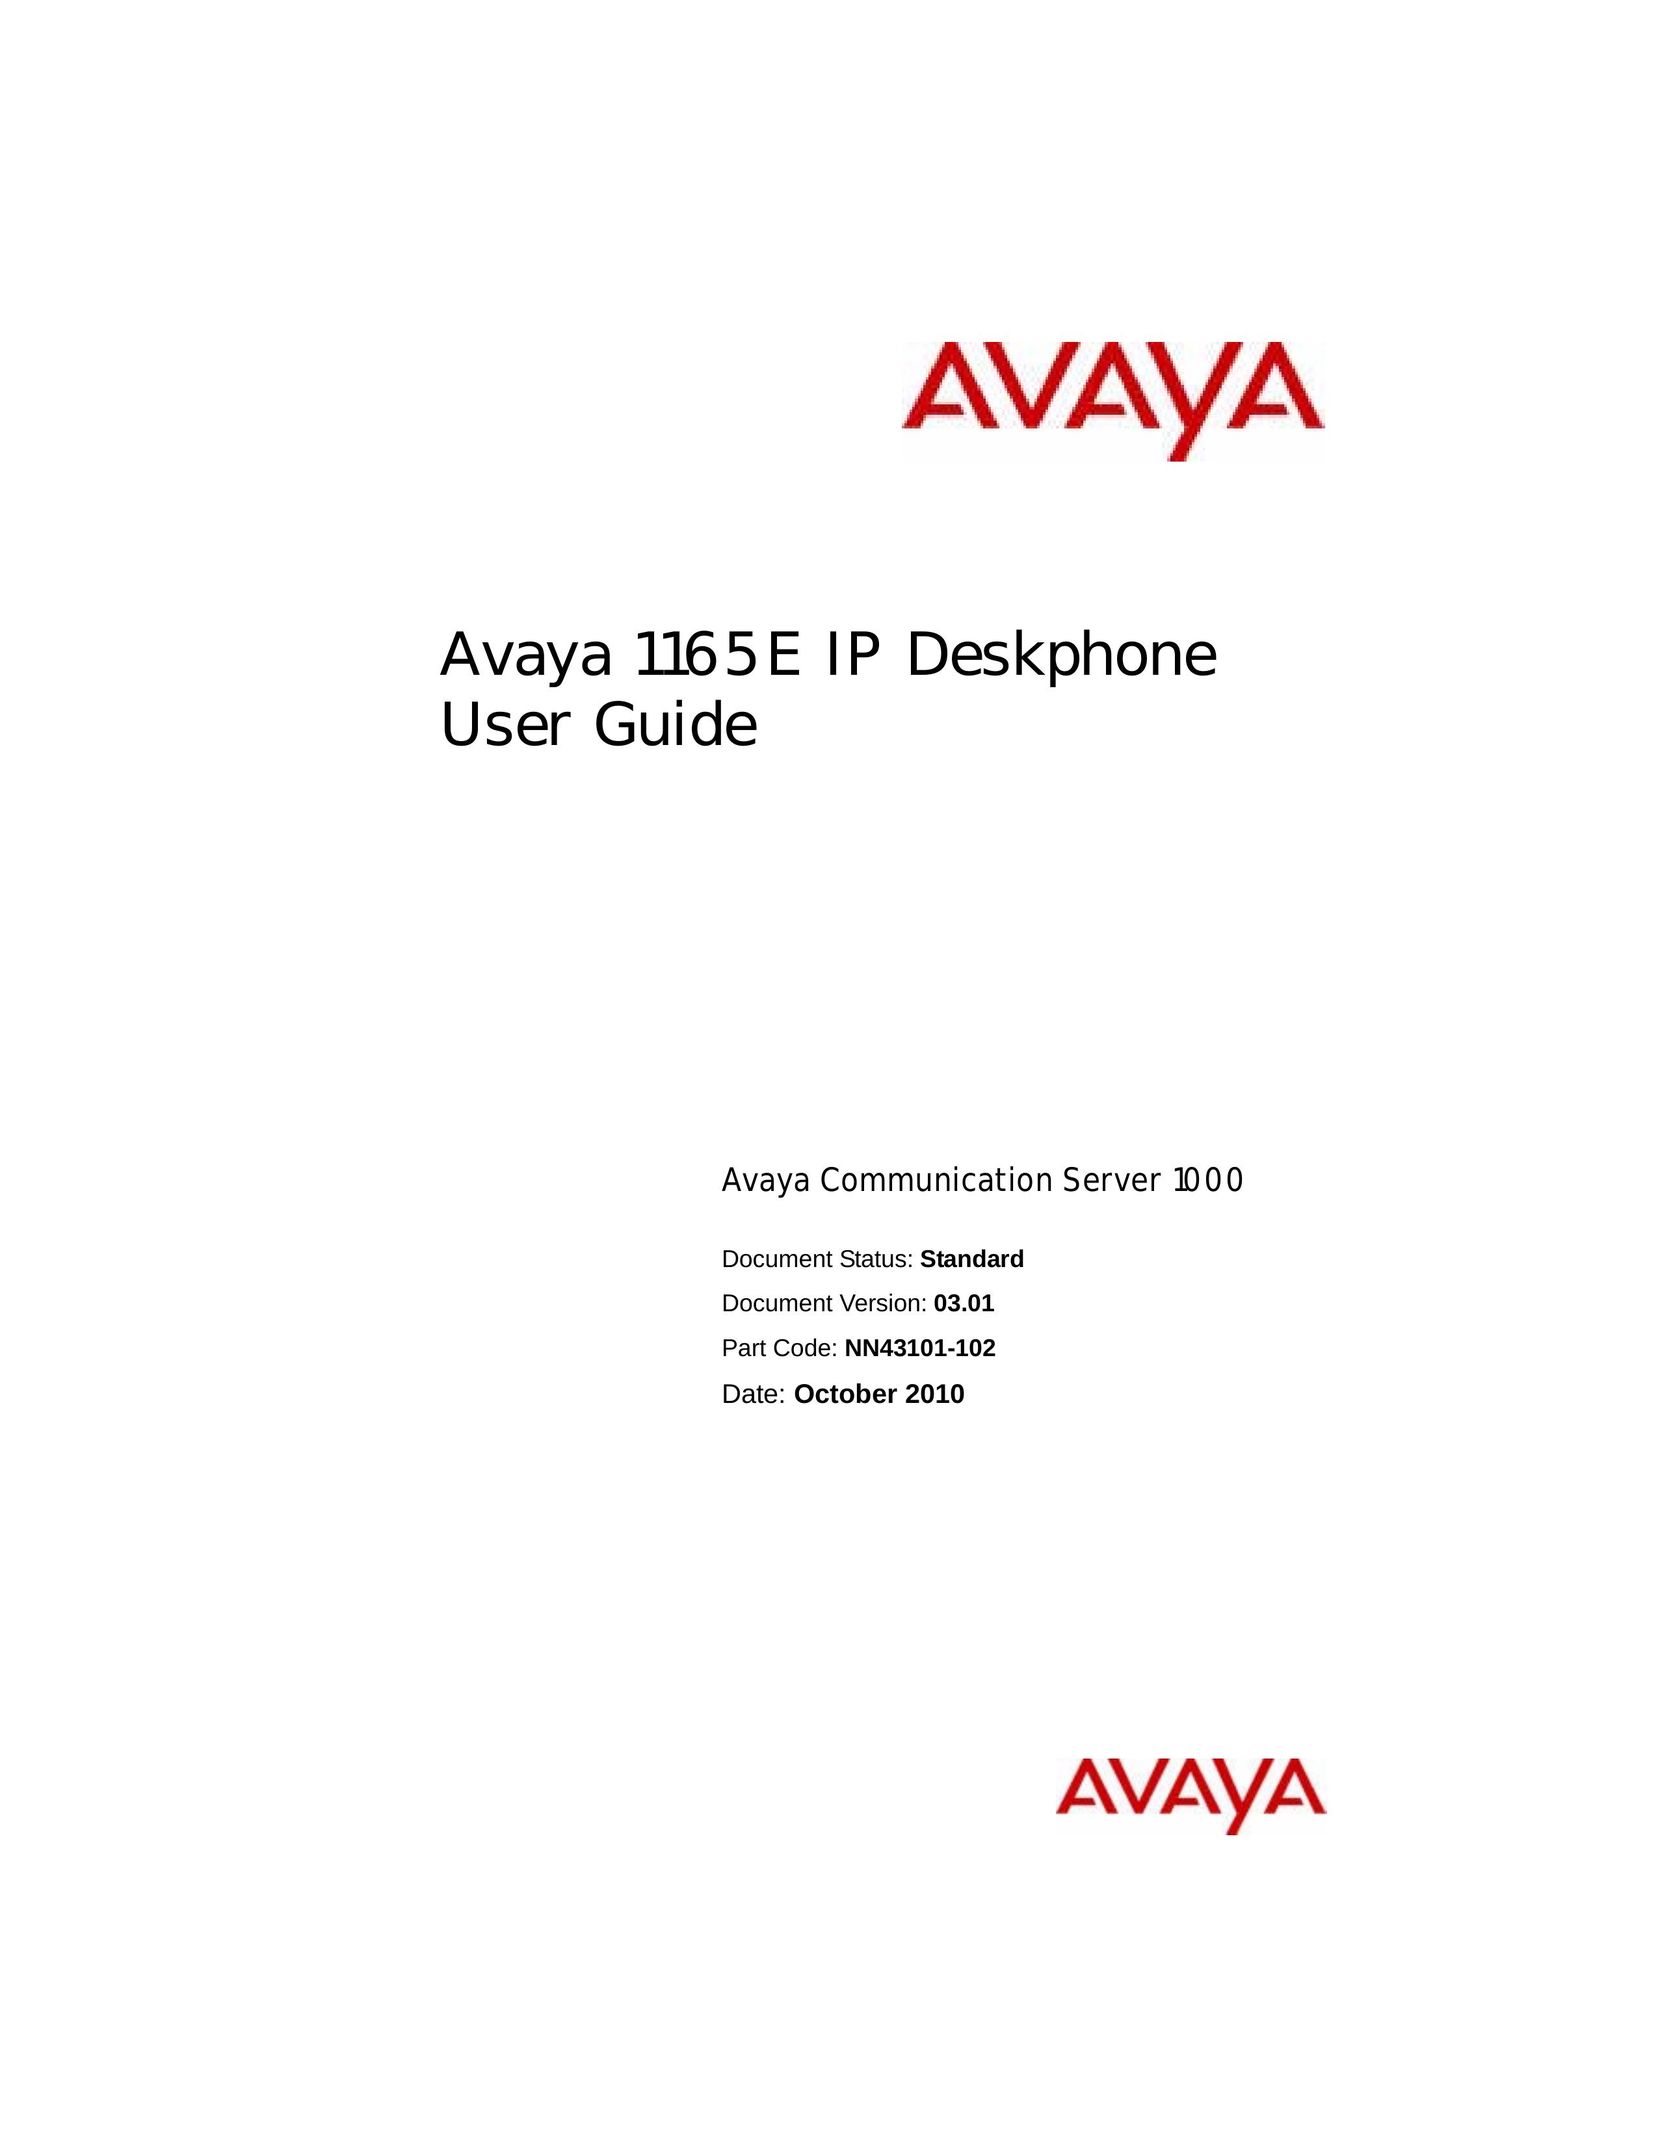 Avaya 1165E Cordless Telephone User Manual